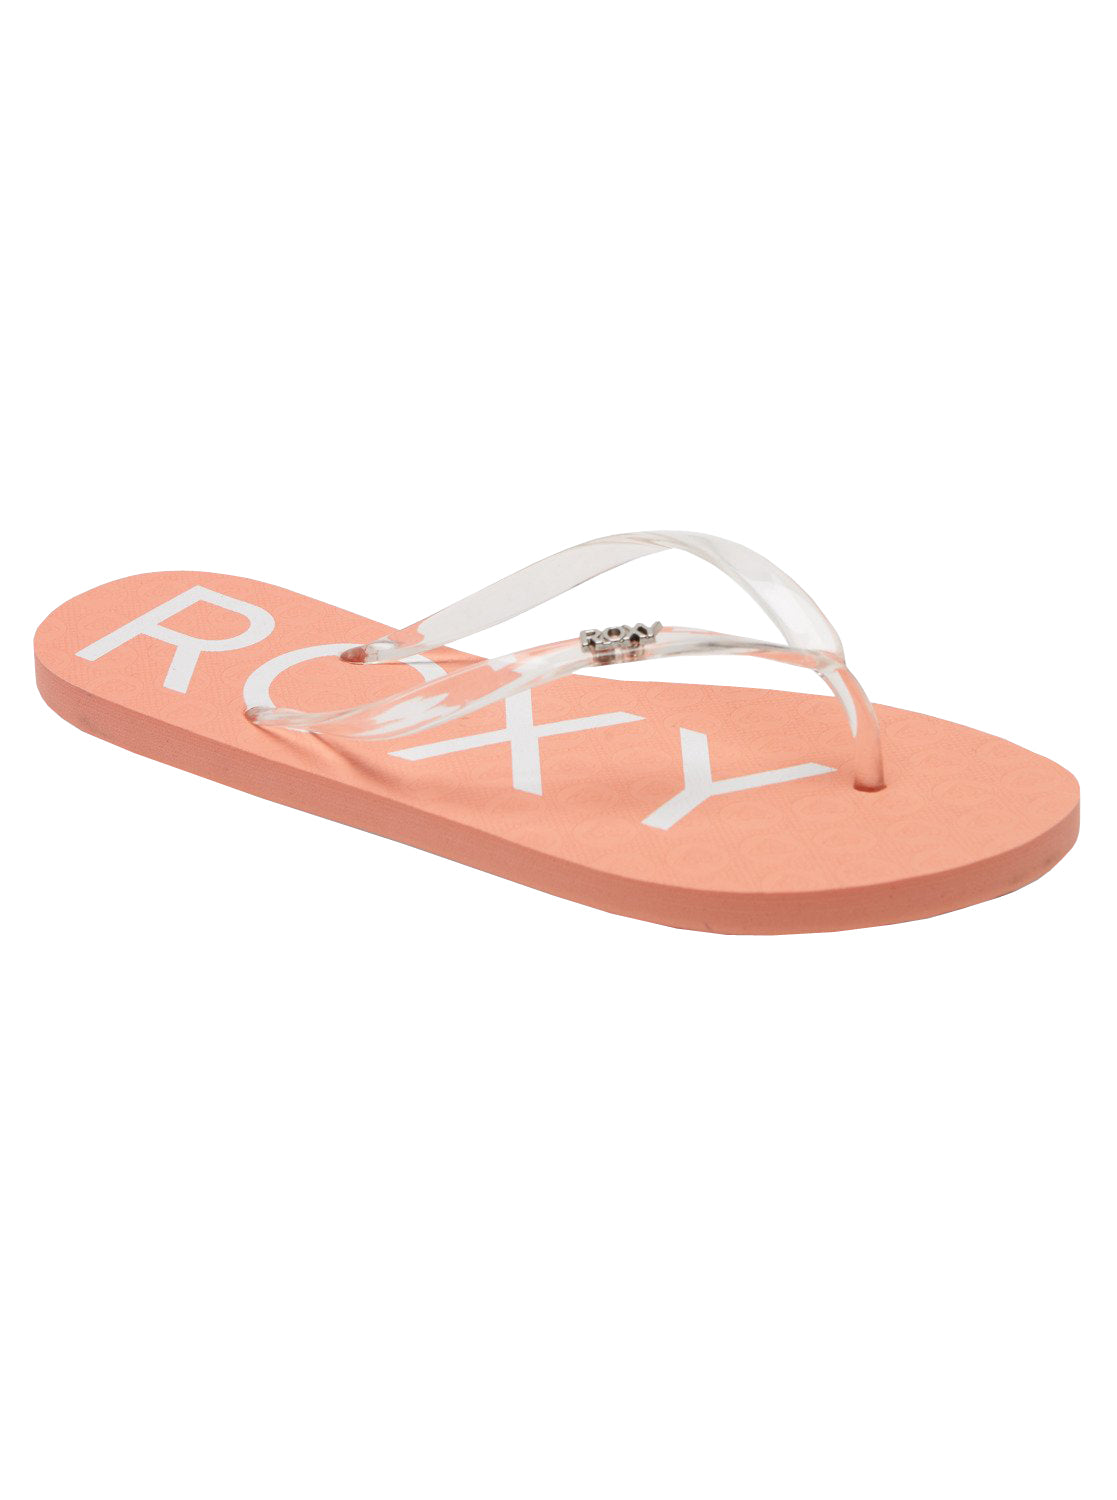 Roxy Viva Jelly Womens Sandal HCO-Hot Coral 11